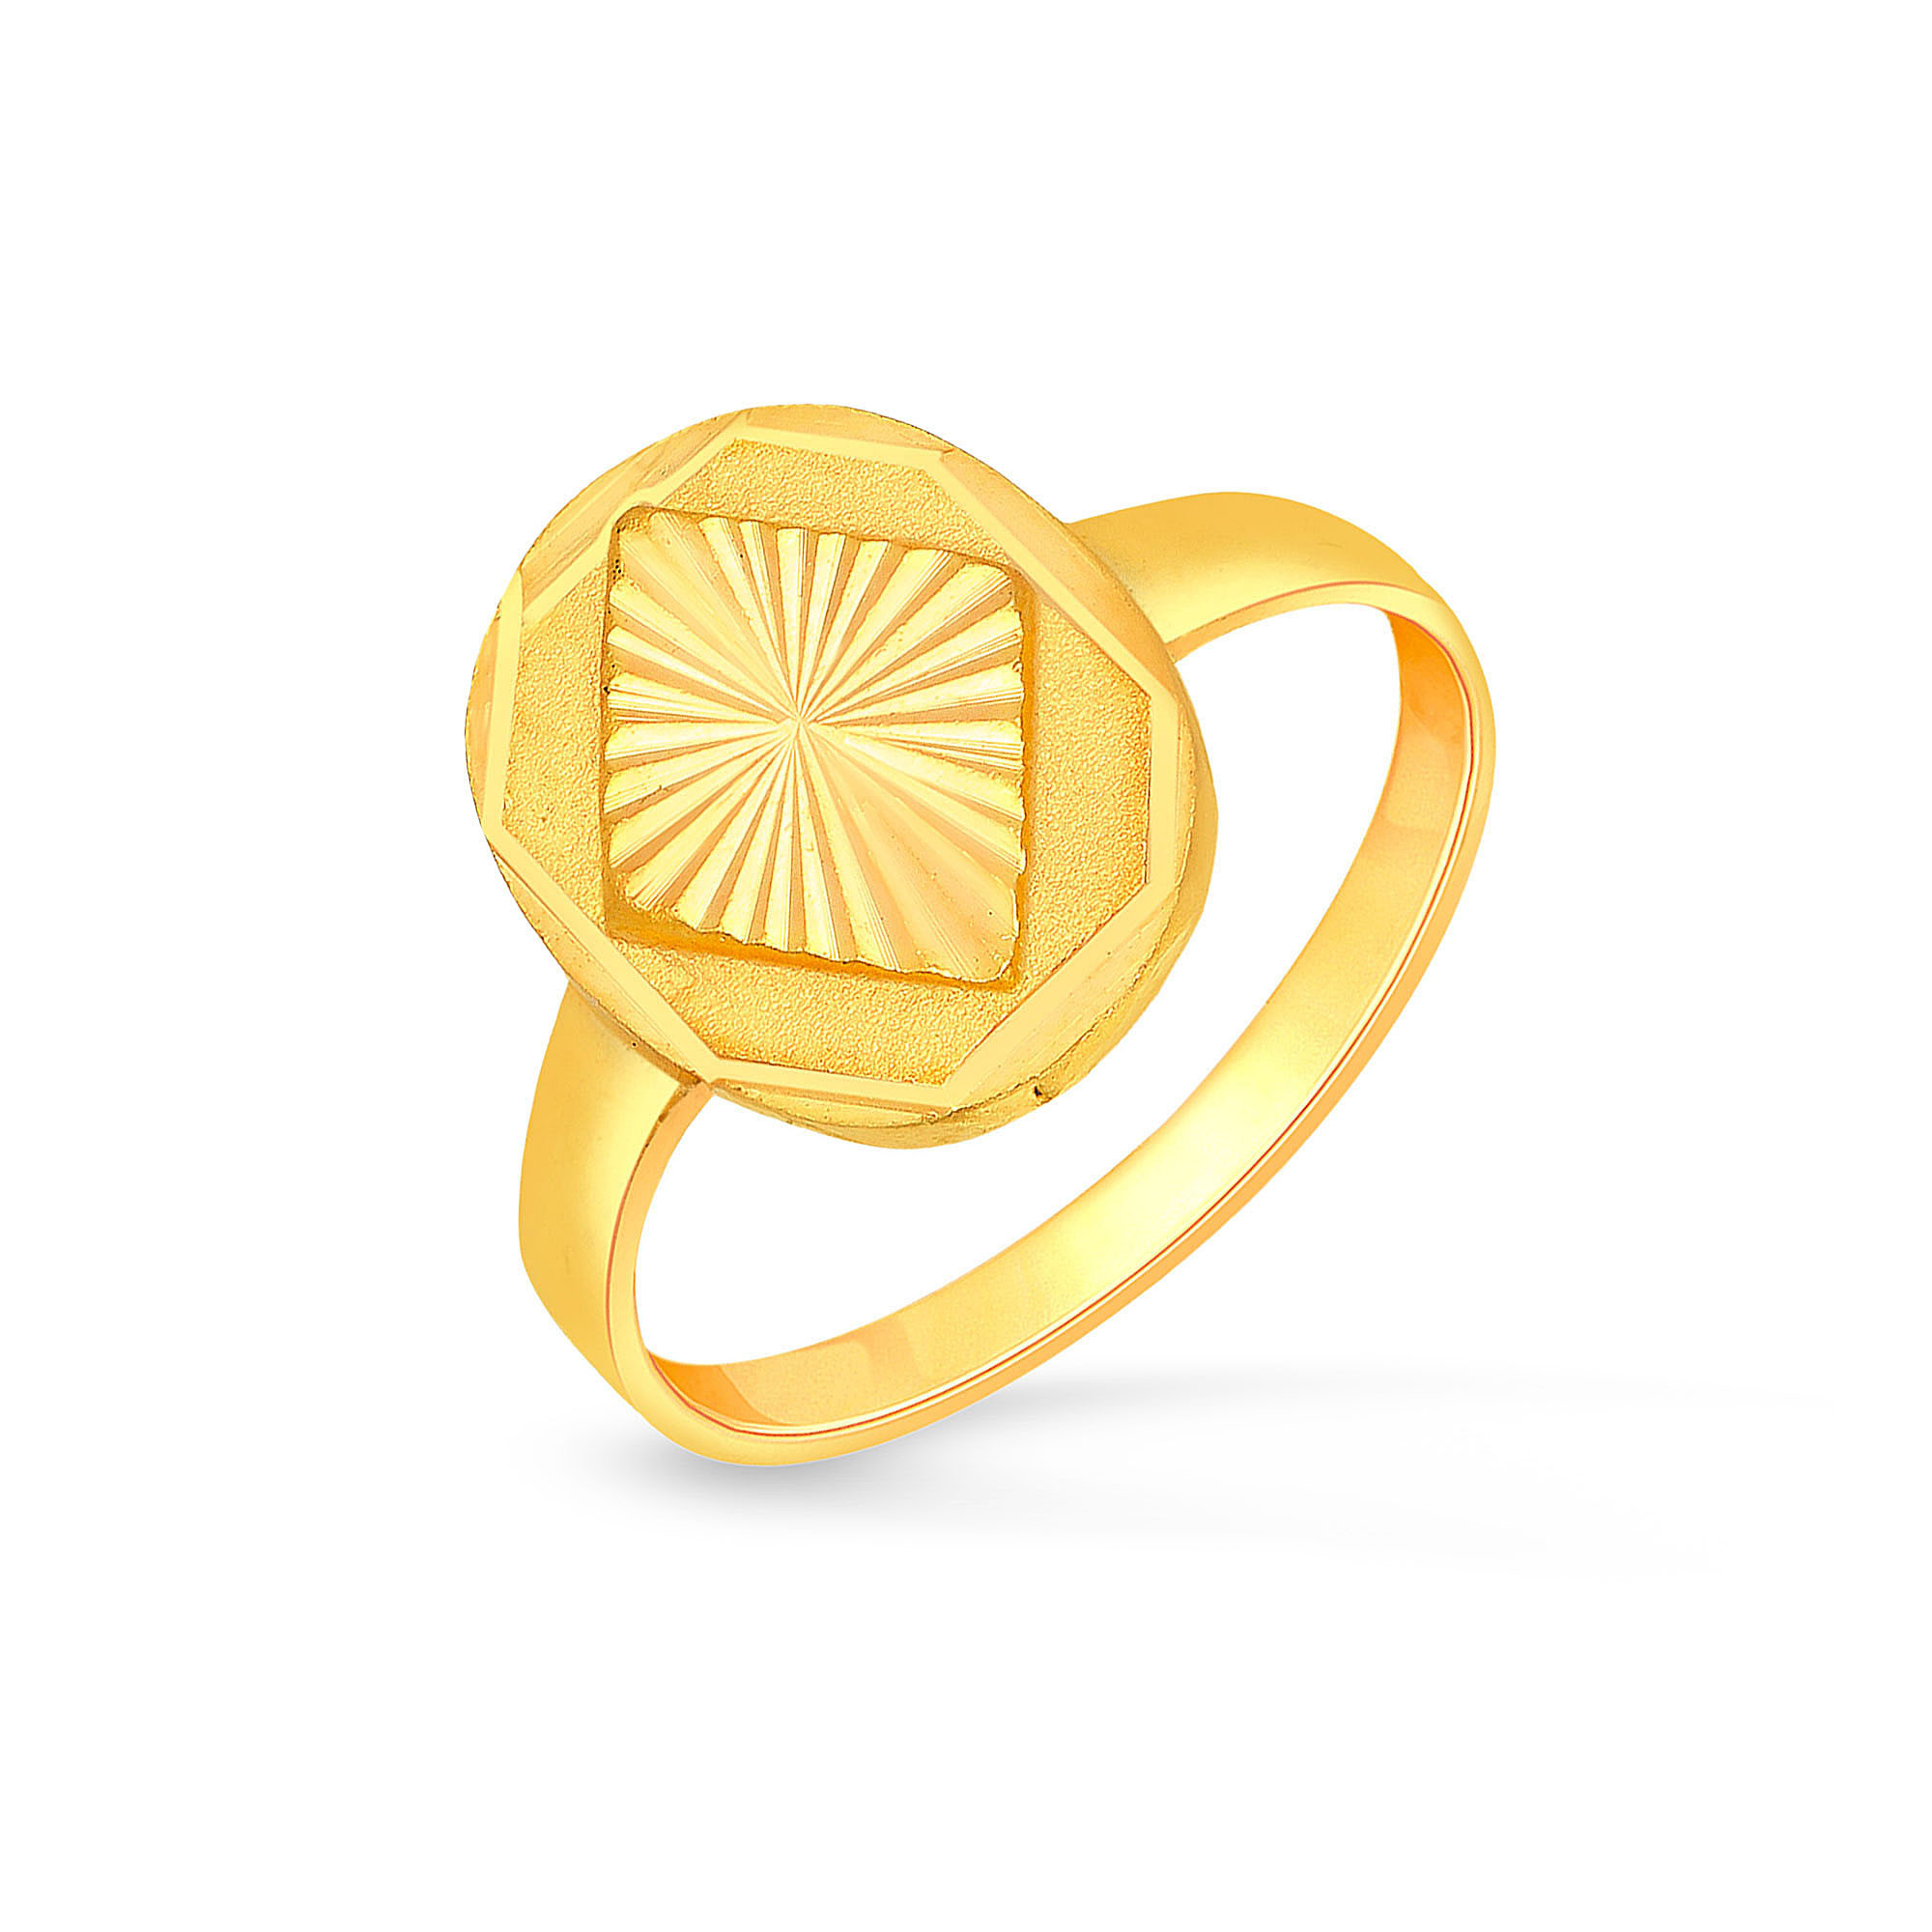 Malabar gold rings with price | Malabar ring designs| Malabar light weight gold  rings - YouTube